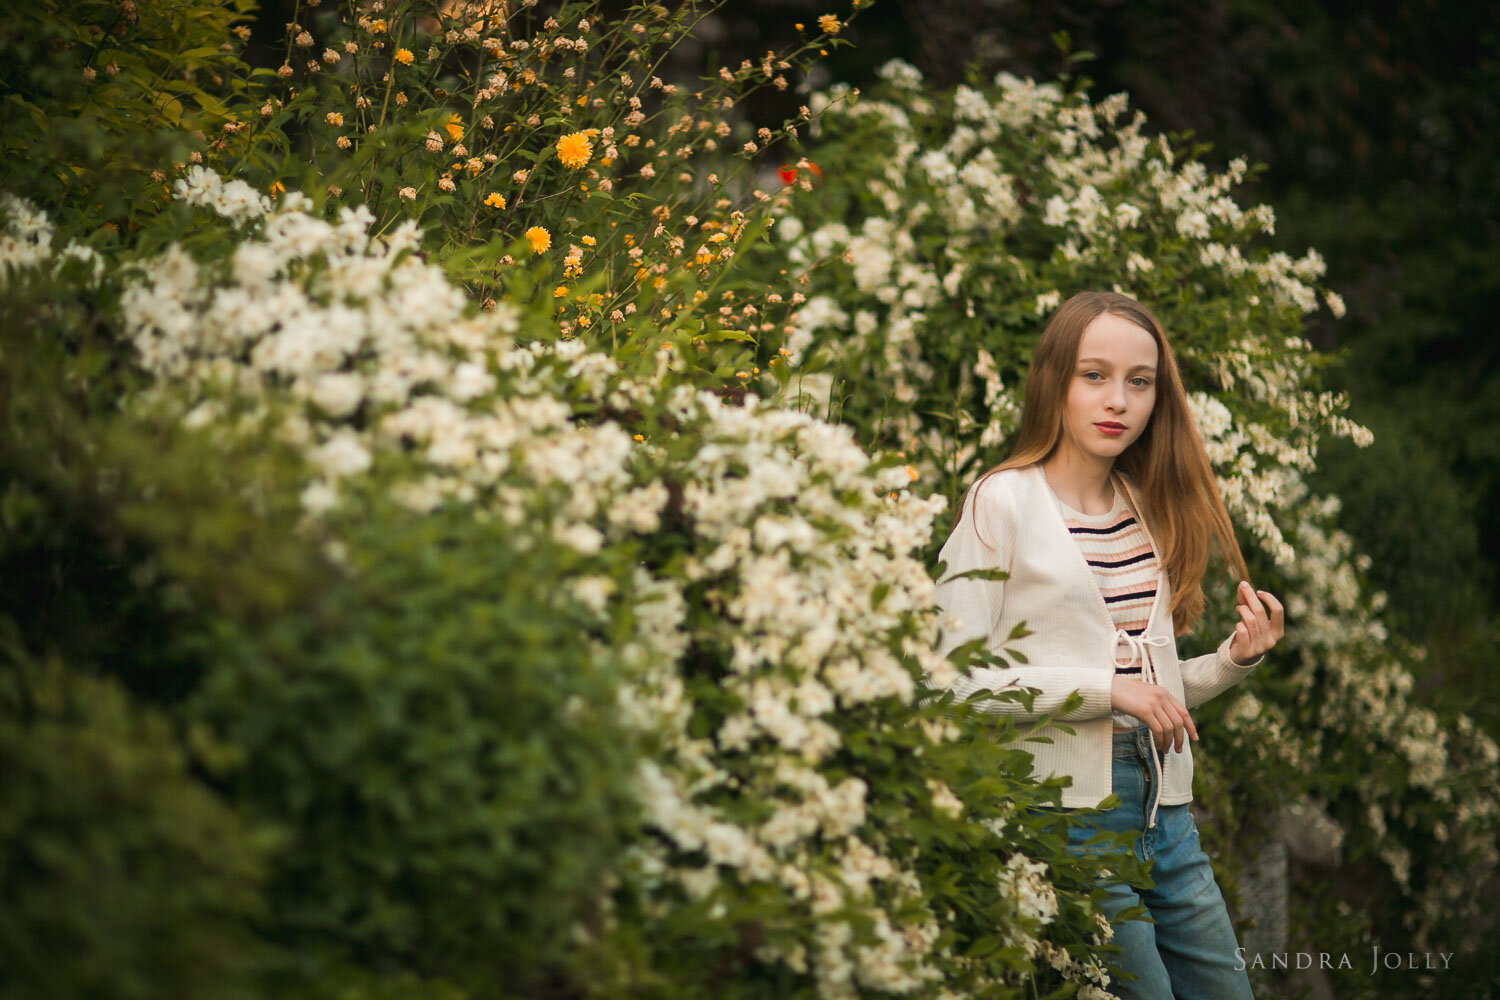 tween-beside-flowers-by-sandra-jolly-photography-stockholm photographer.jpg